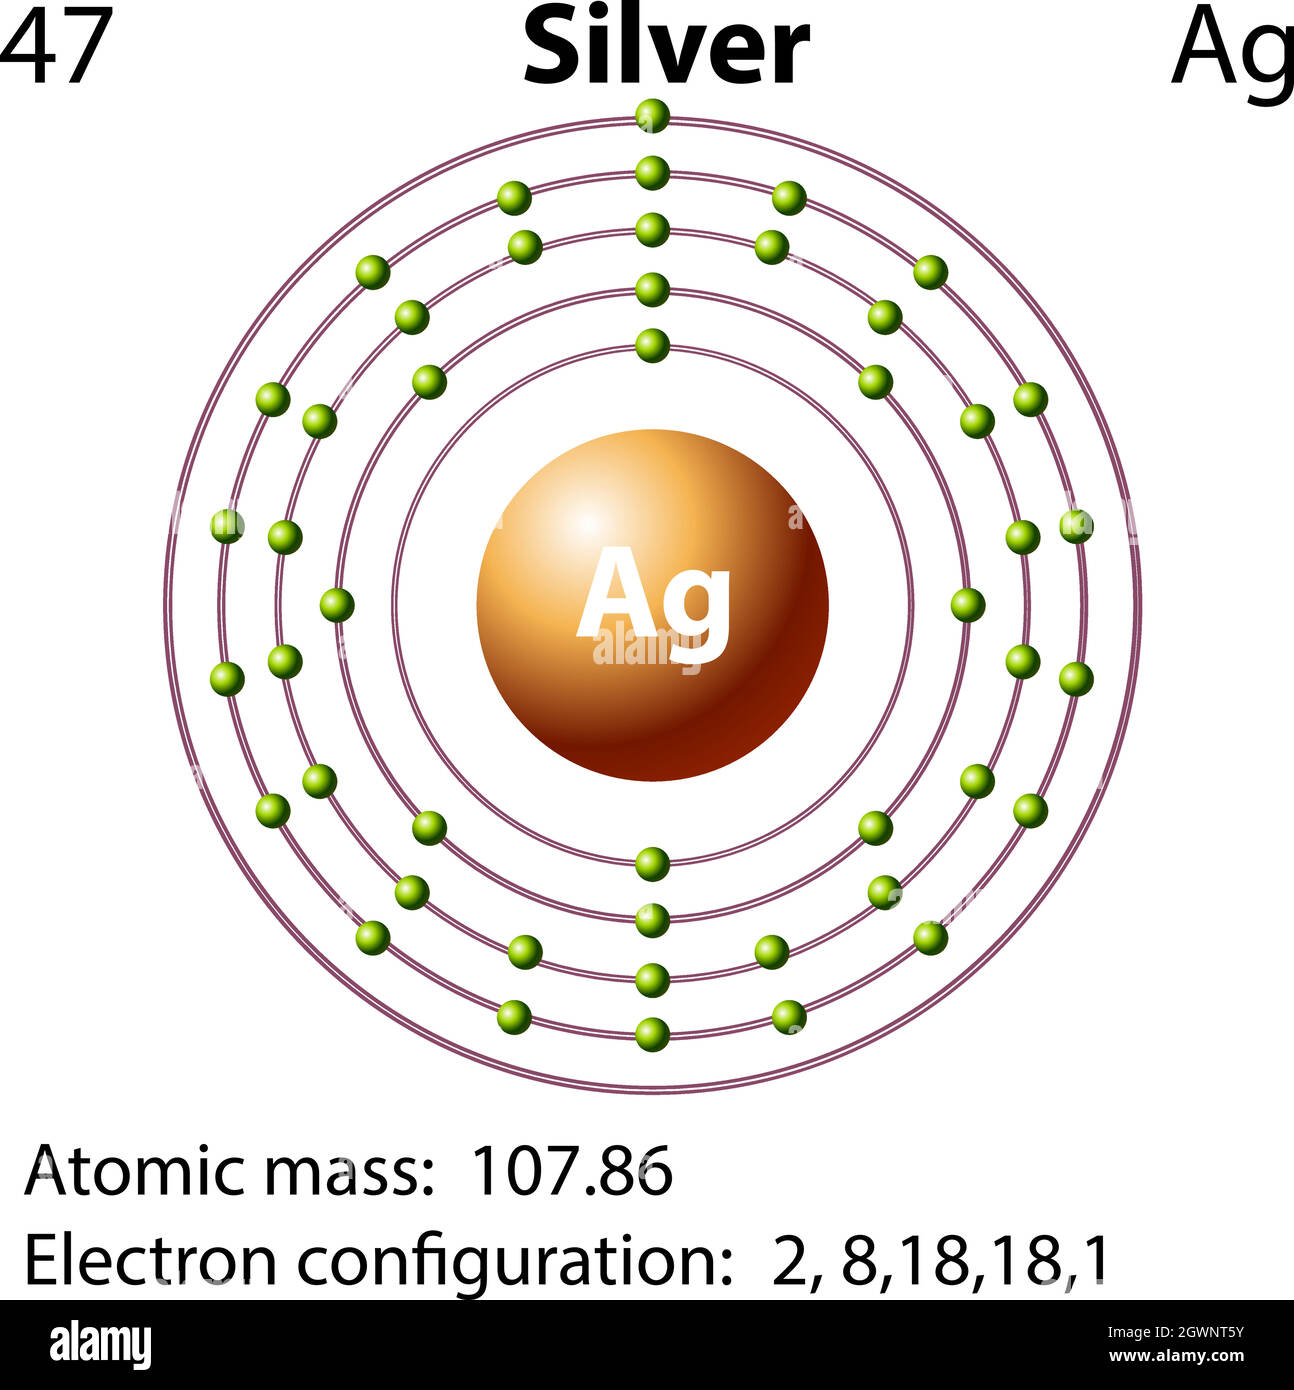 Atomo de plata fotografías e imágenes de alta resolución - Alamy